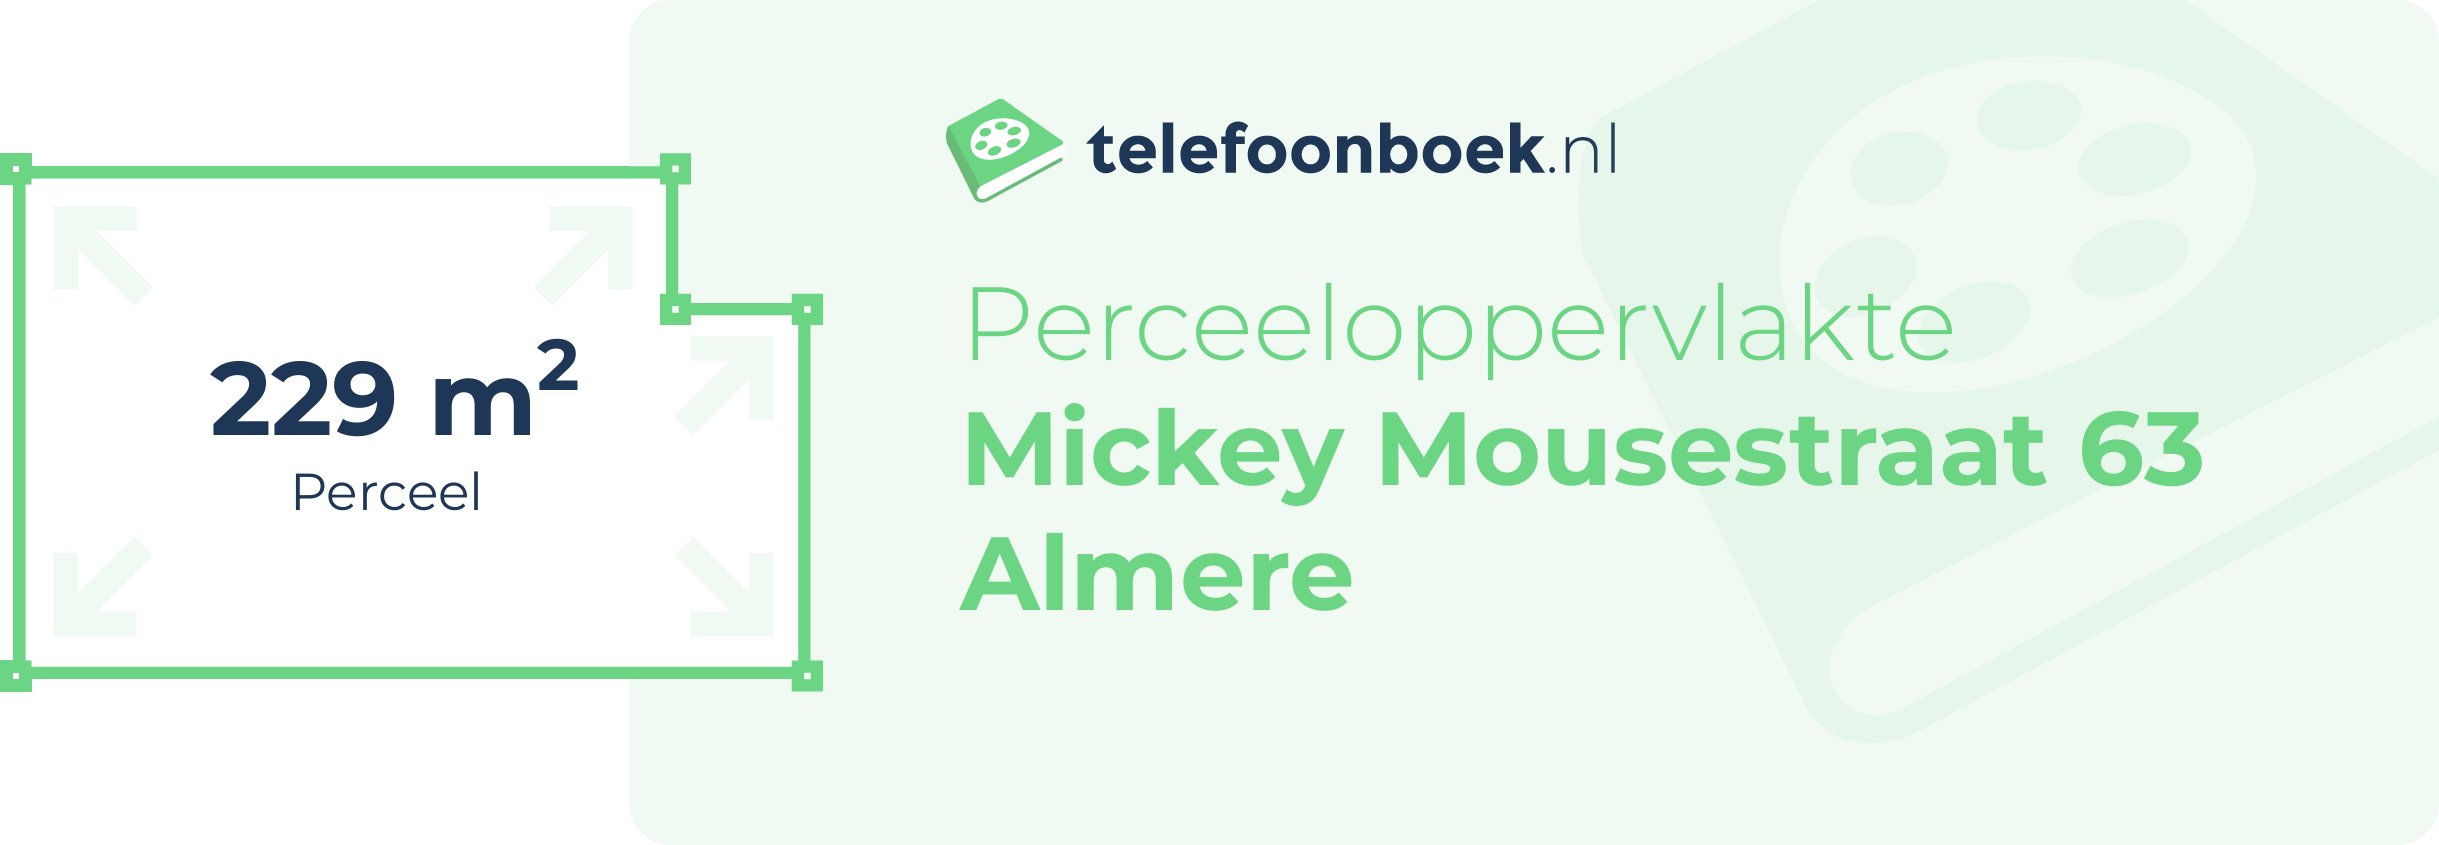 Perceeloppervlakte Mickey Mousestraat 63 Almere